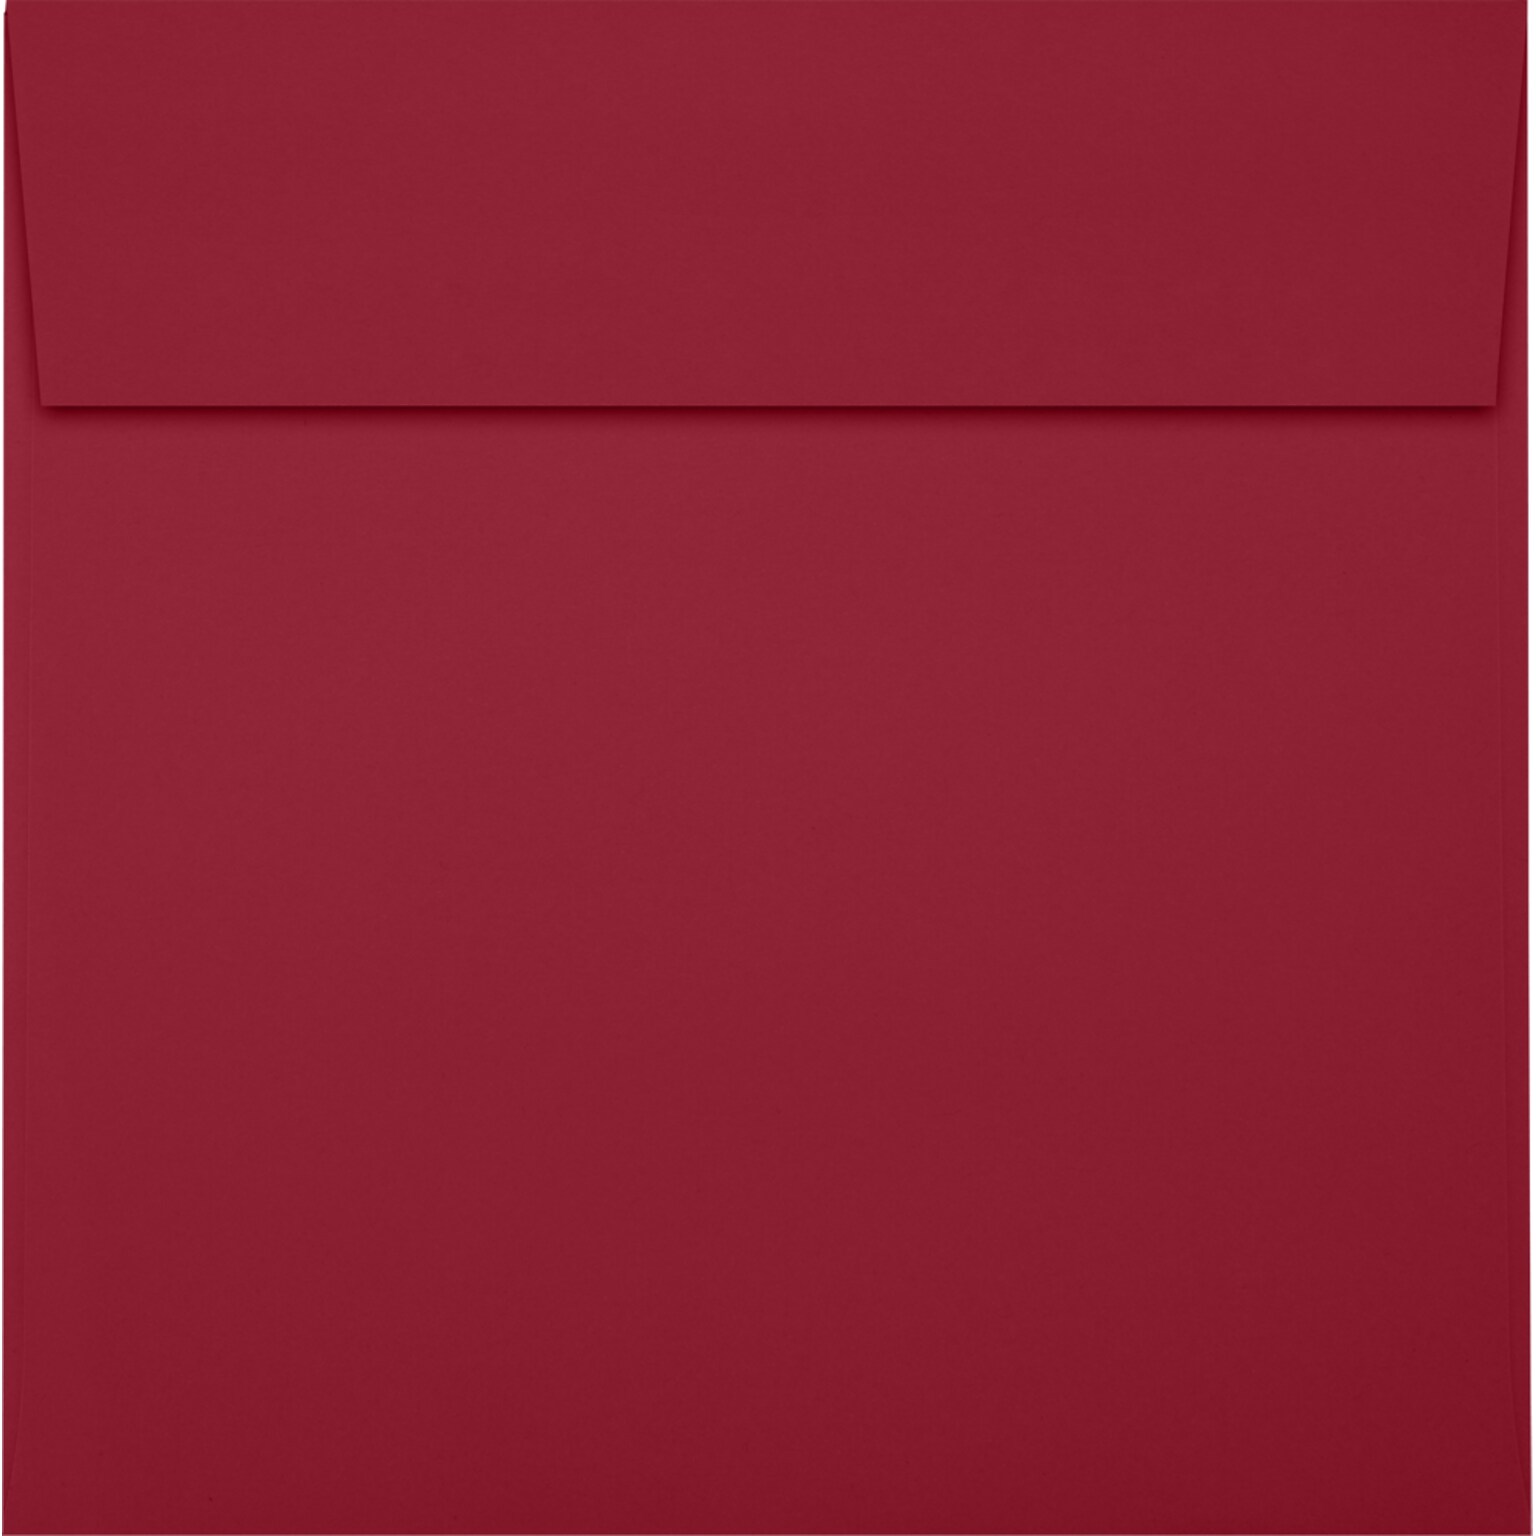 JAM Paper Square Envelopes, Peel & Press, Garnet Red, 6 x 6, 500 Pack (8525-101-500)